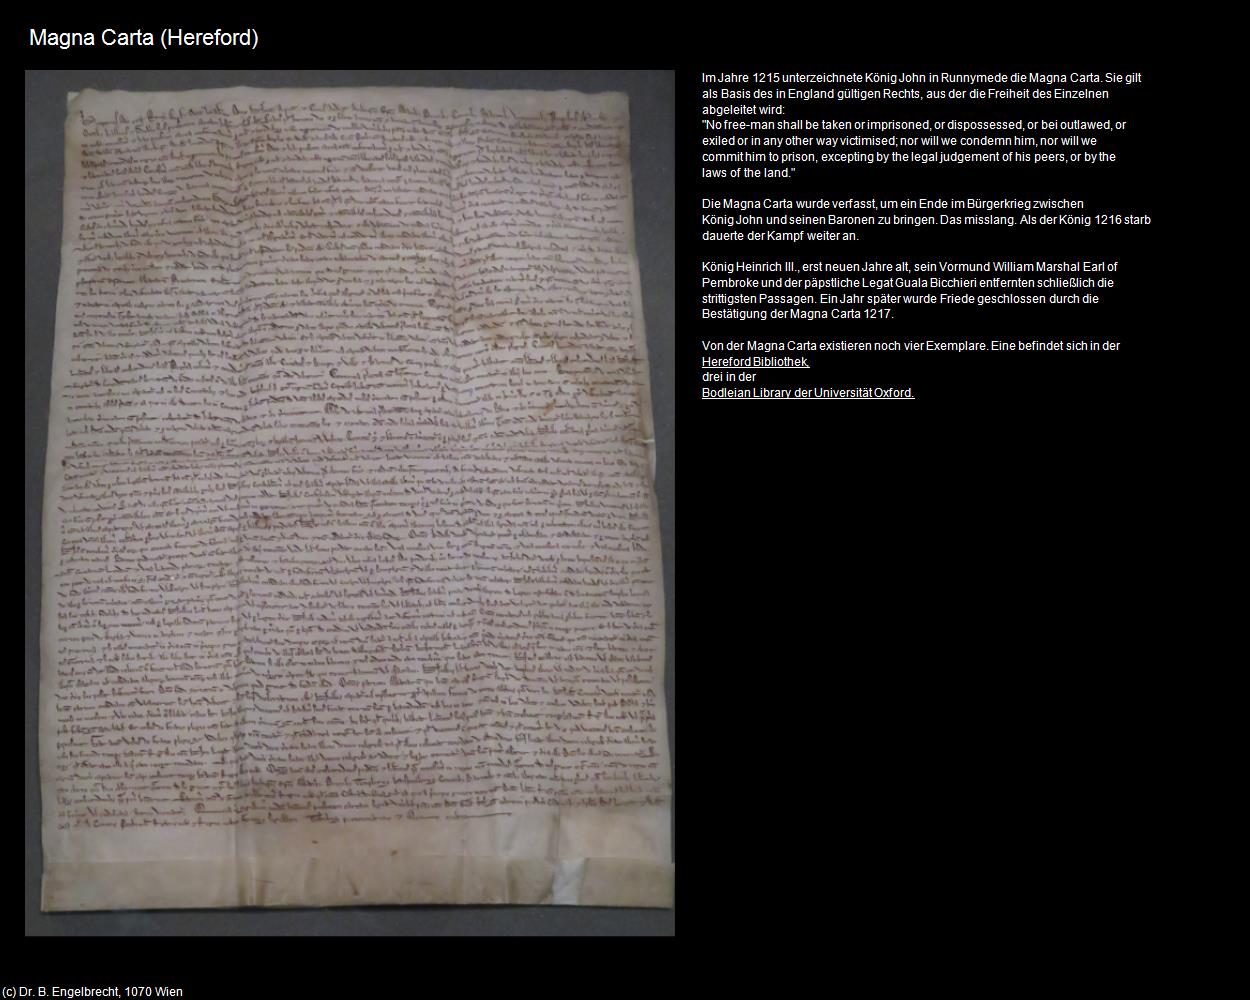 Magna Carta (Hereford, England) in Kulturatlas-ENGLAND und WALES(c)B.Engelbrecht